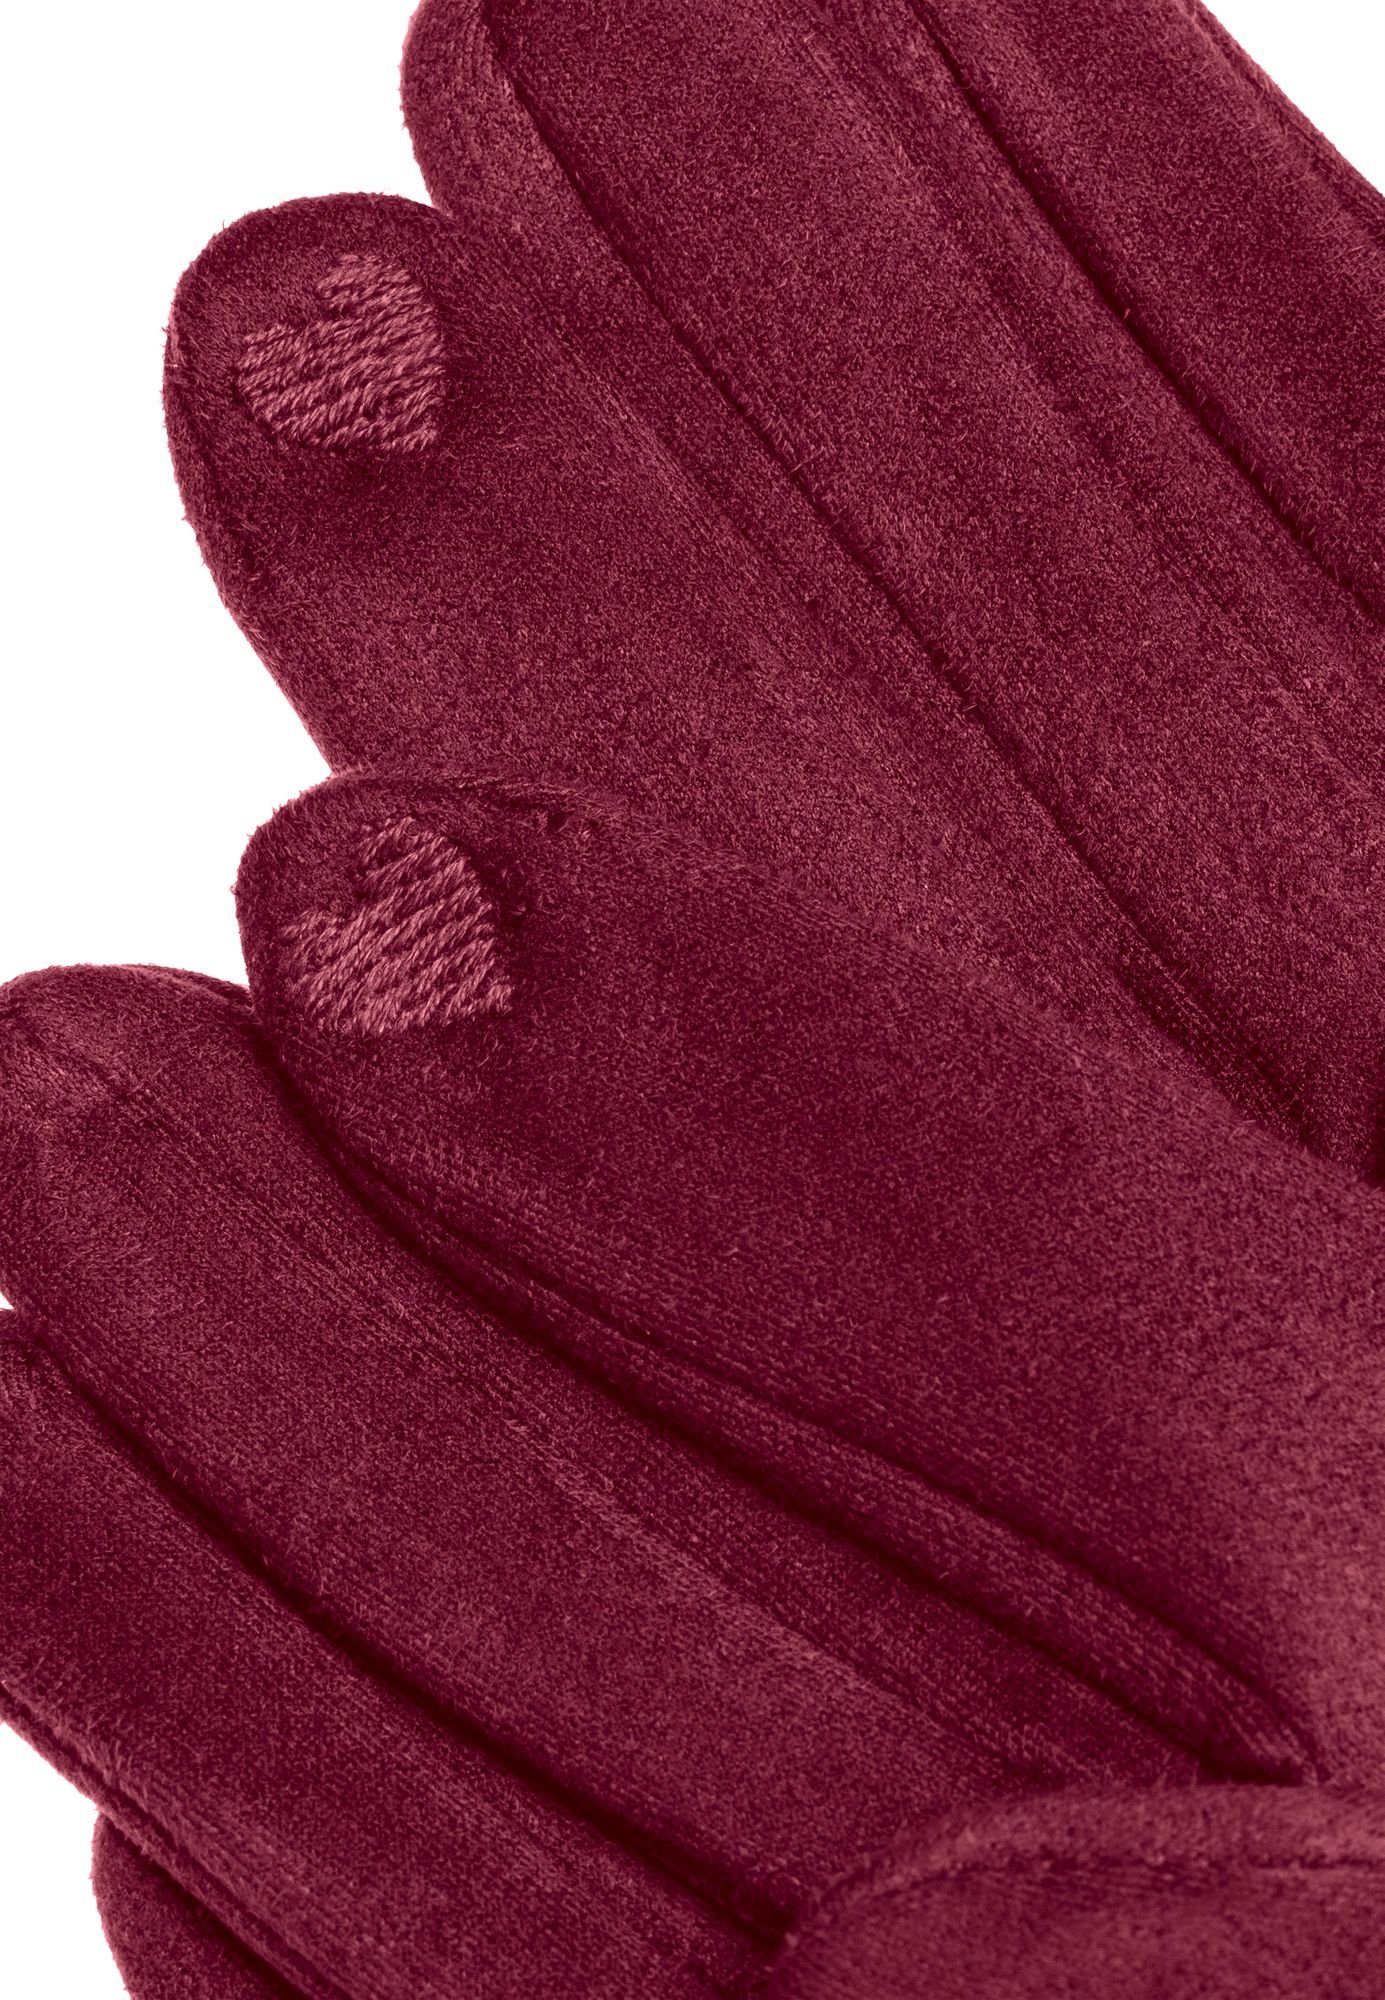 Strickhandschuhe Winter elegante uni Caspar klassisch weinrot GLV013 Handschuhe Damen